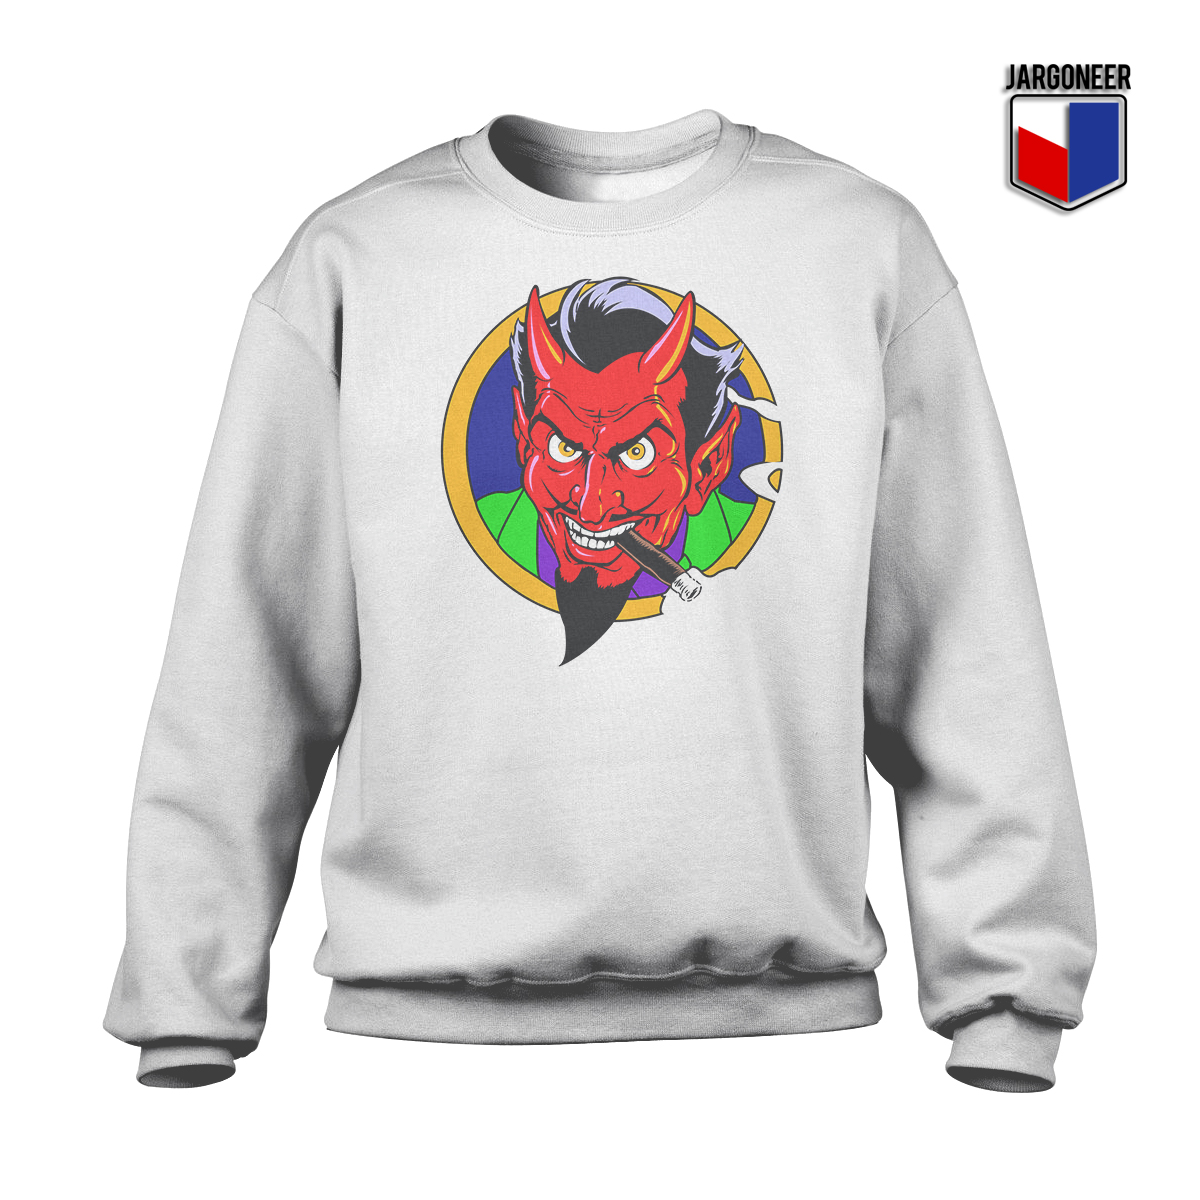 The Red Devil Face White SS - Shop Unique Graphic Cool Shirt Designs